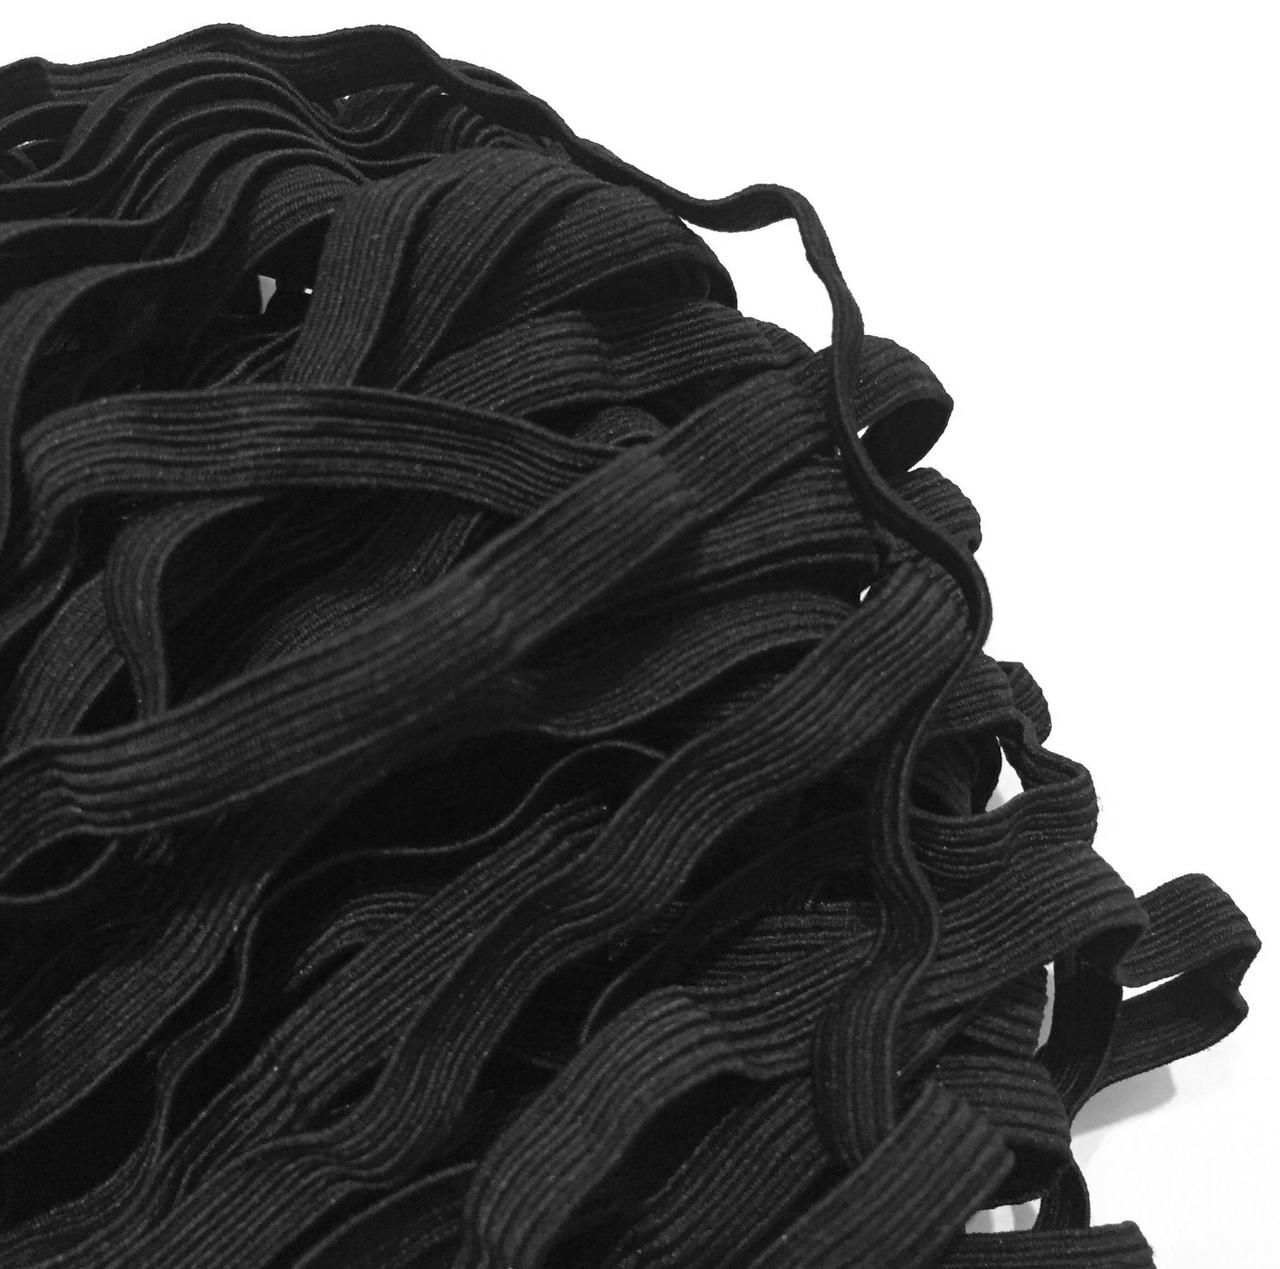 Гумка плетена продежна п/е 8мм колір чорний (уп 100м) Ф